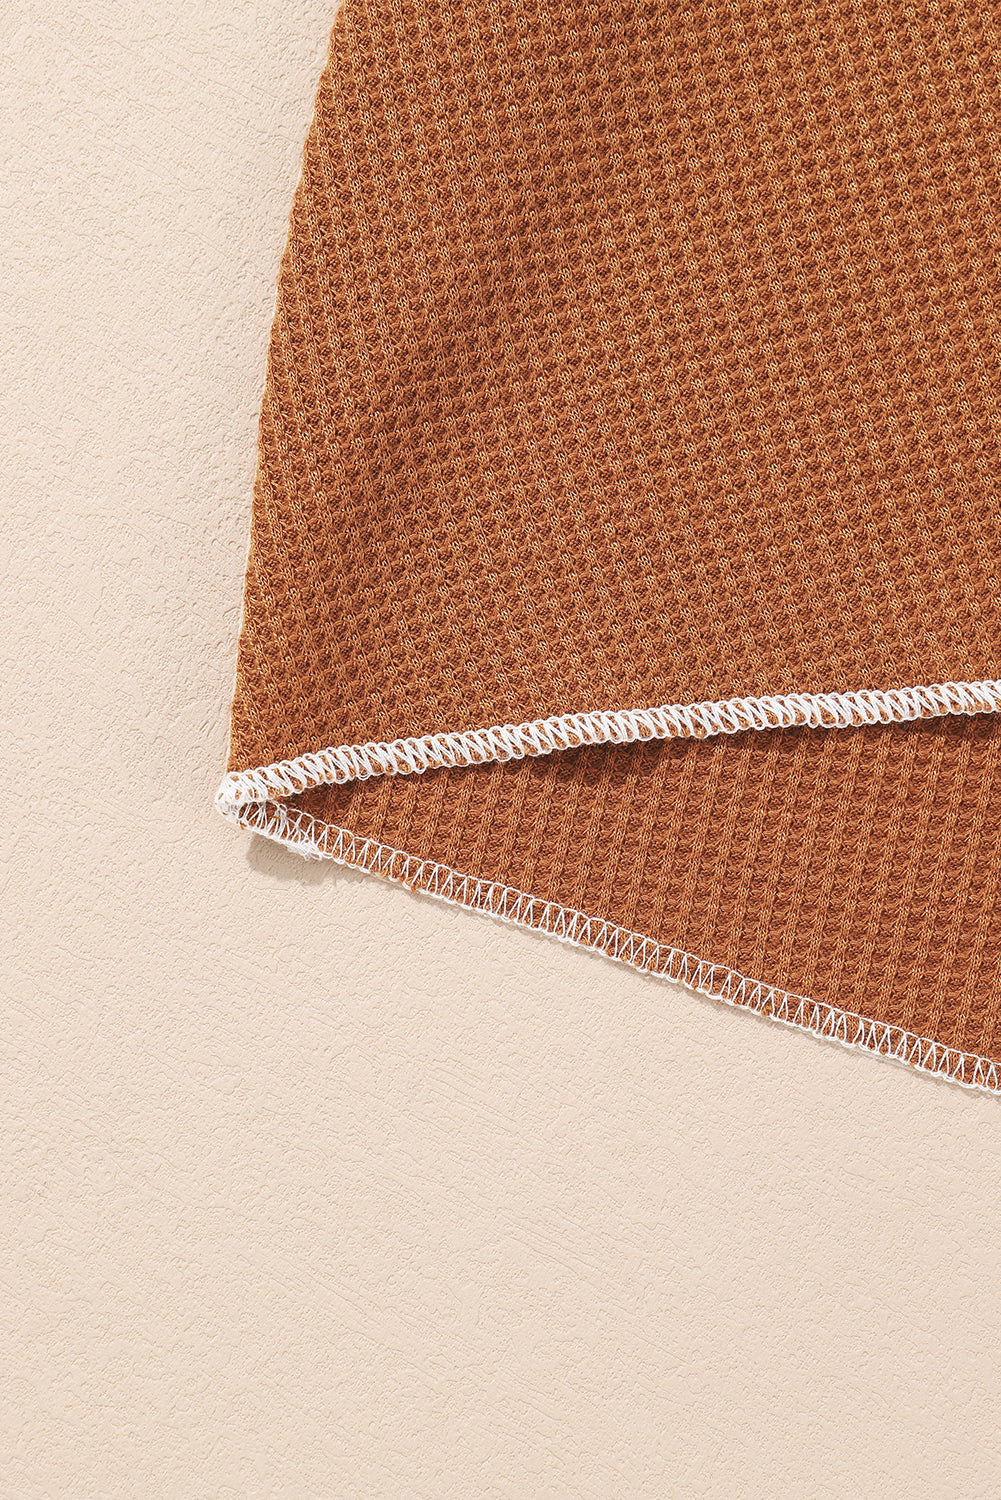 Chestnut Exposed Seam Detail Plus Size Textured Top